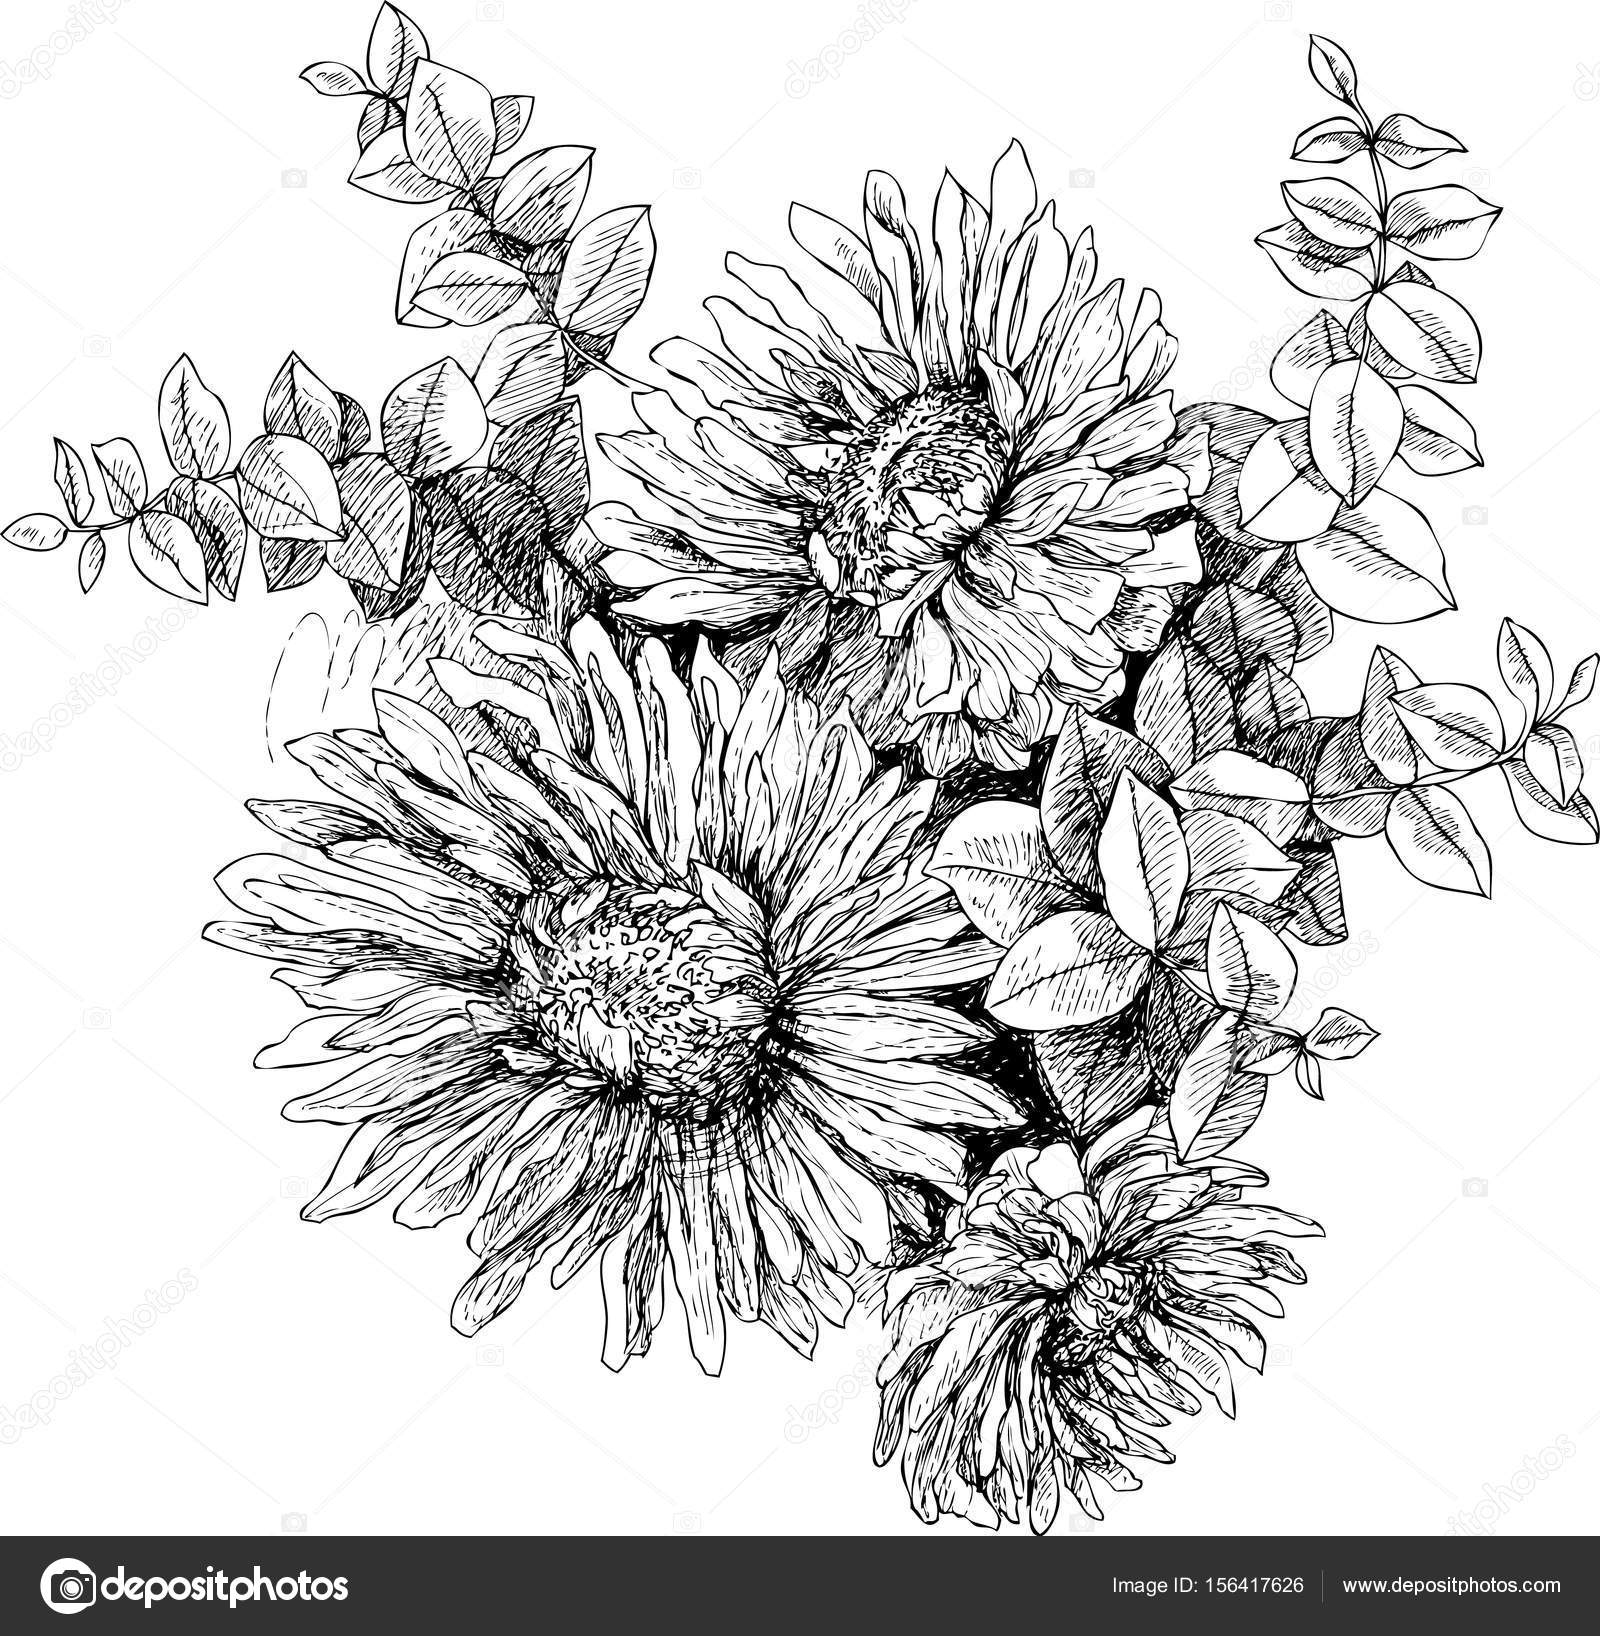 Vintage Botanical Illustration Blossom Garden Flowers Stock Vector C Ledepict Gmail Com 156417626